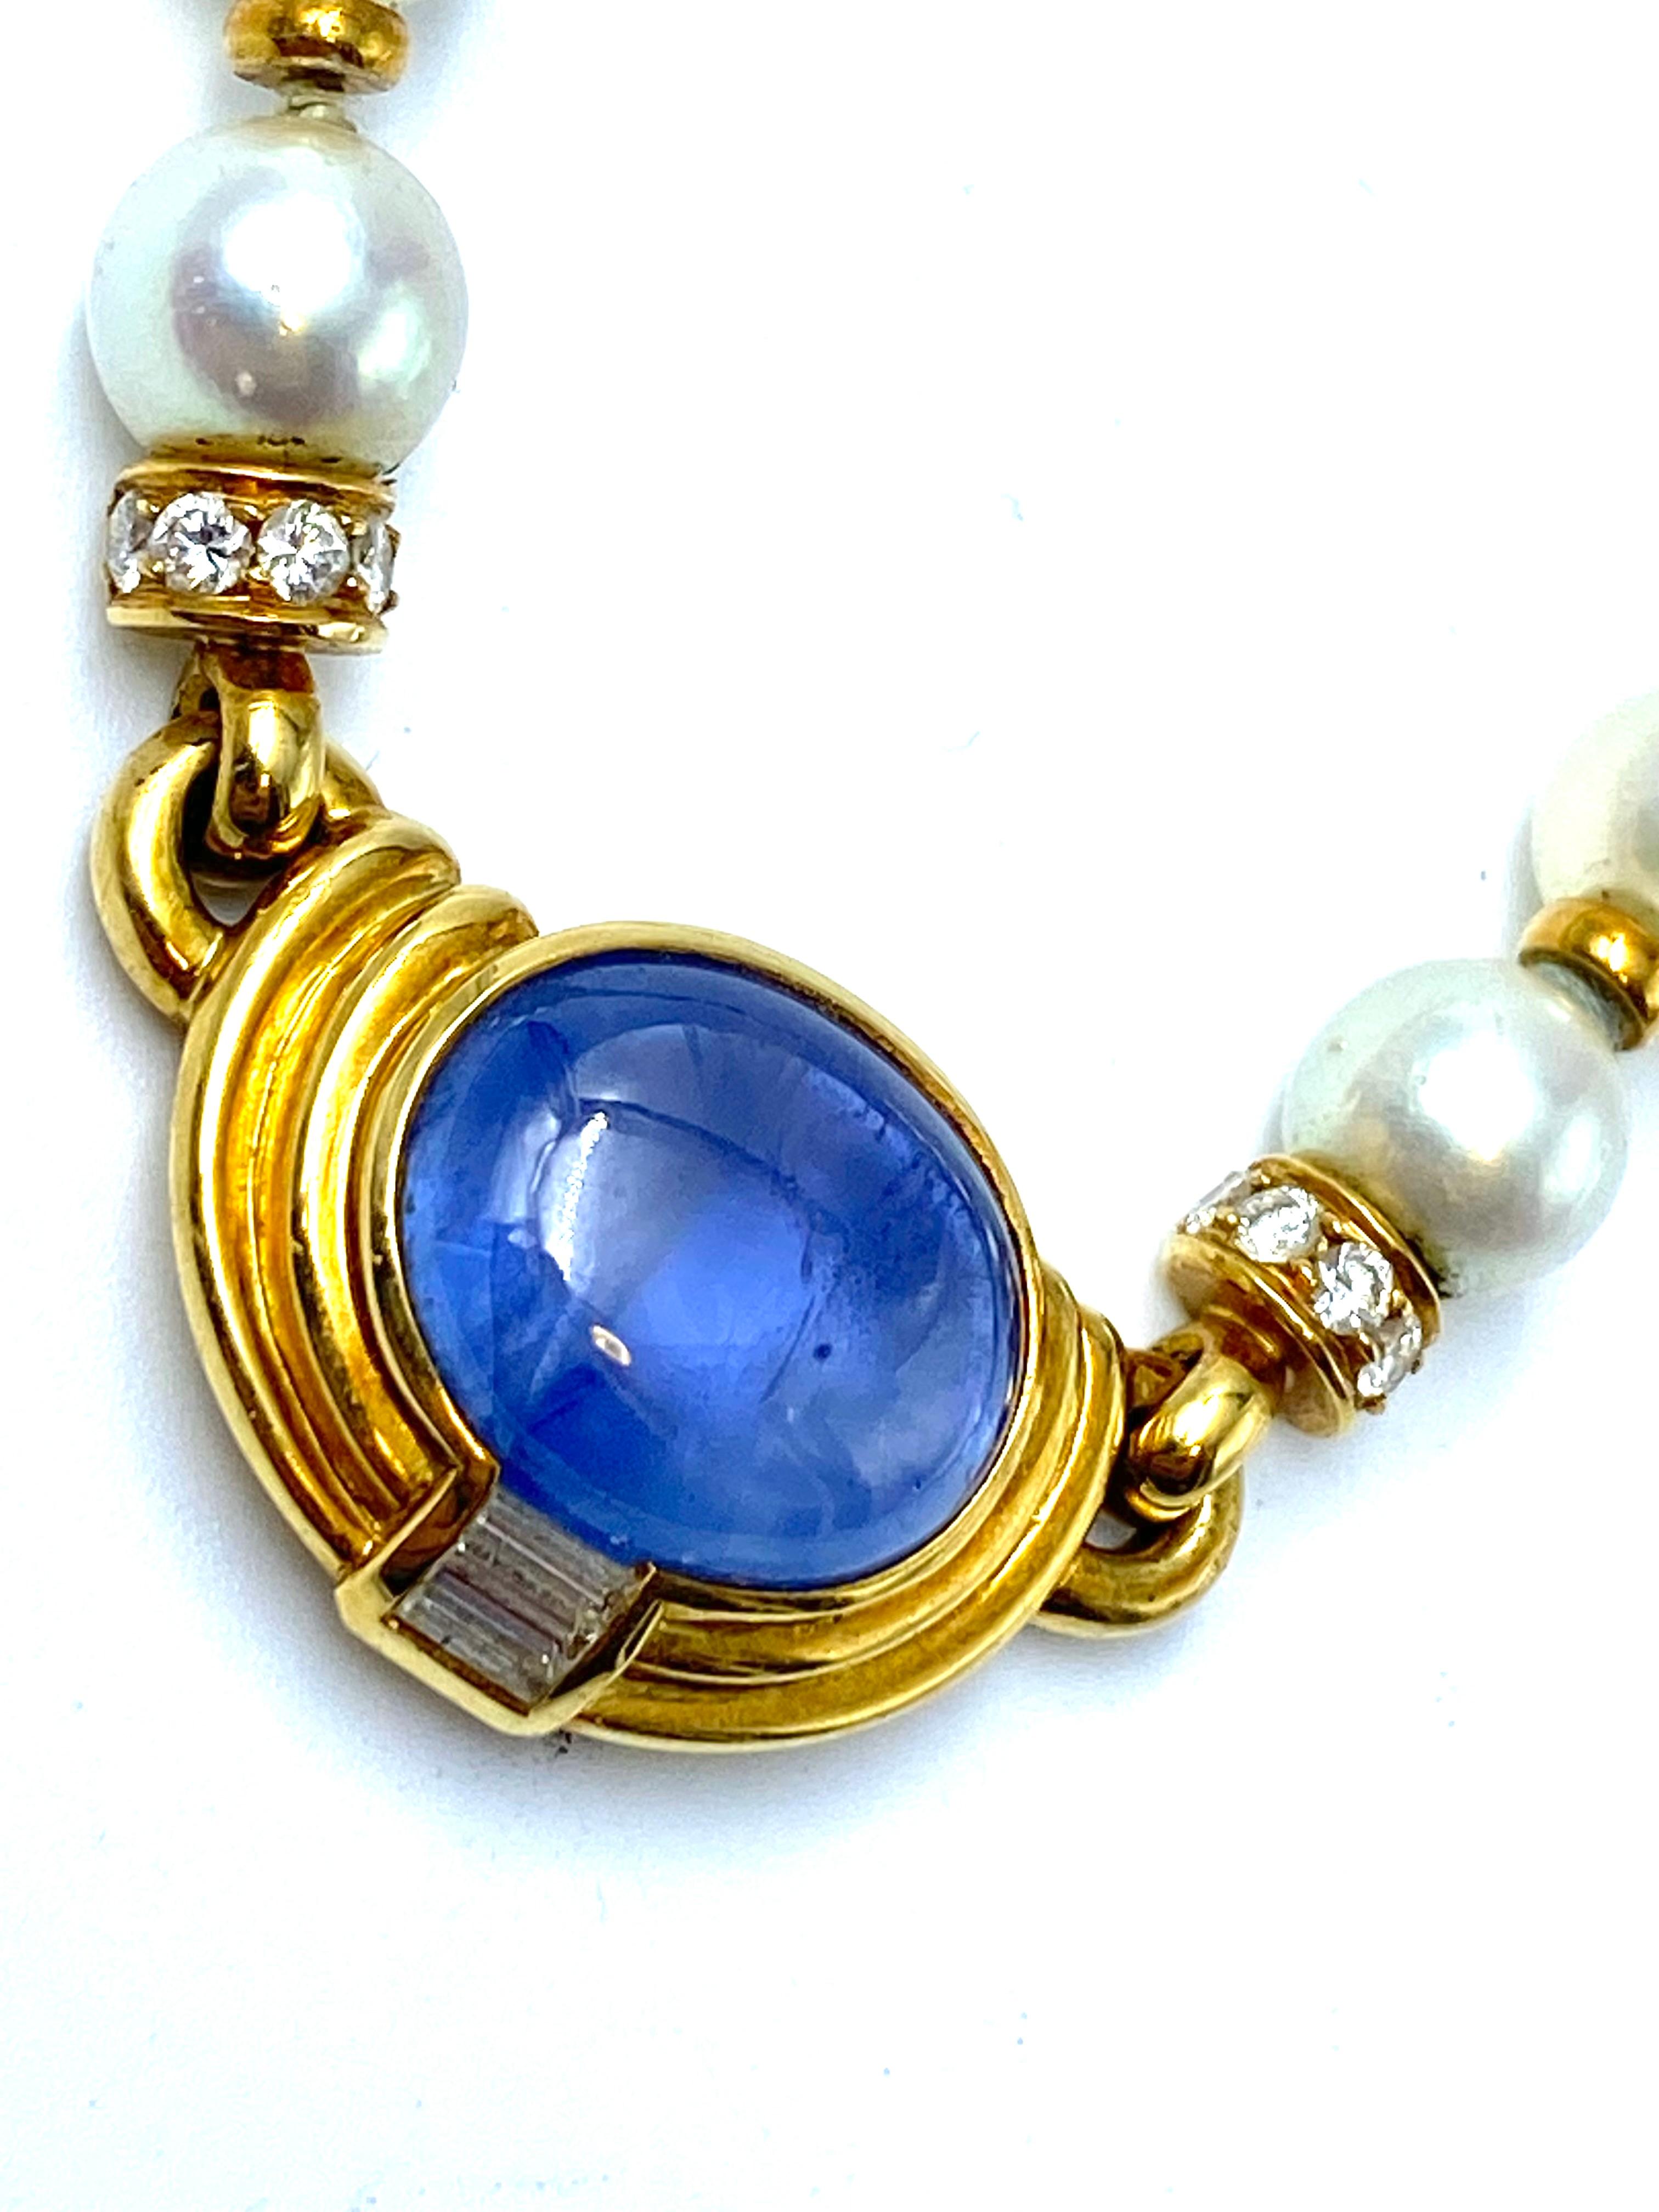 contemporary refined jewelry